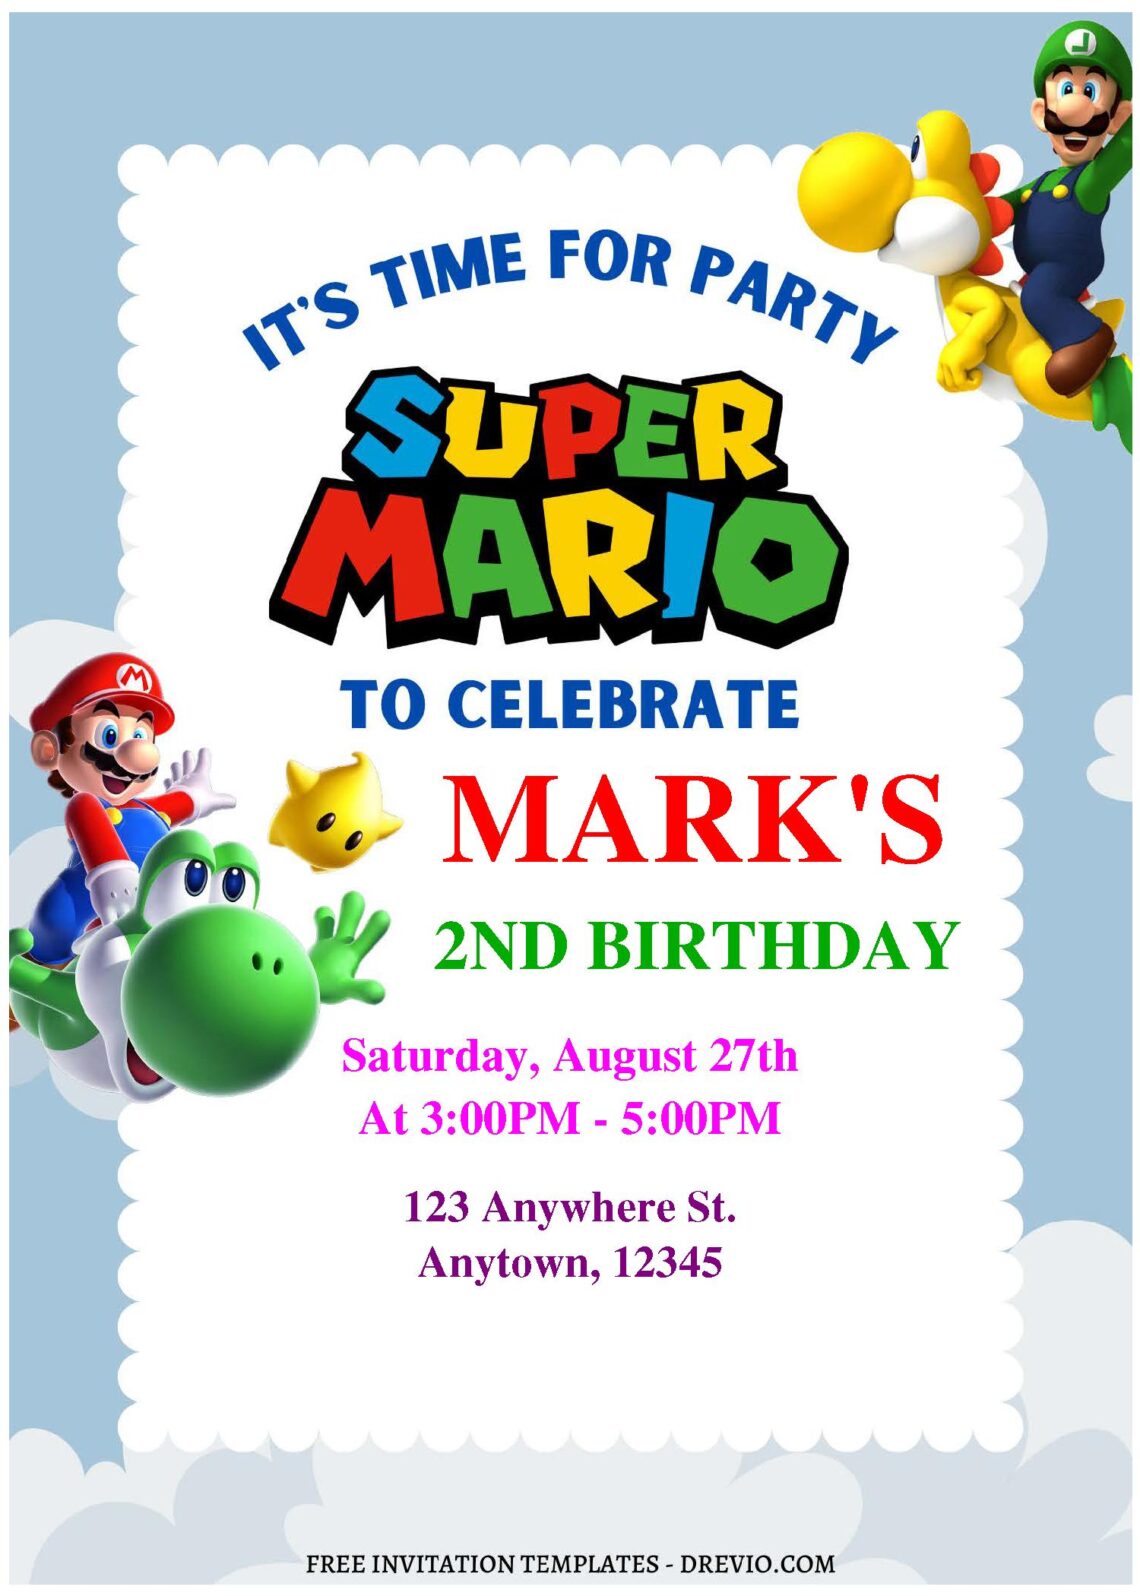 (Free Editable PDF) The Super Mario Bros Birthday Invitation Templates a